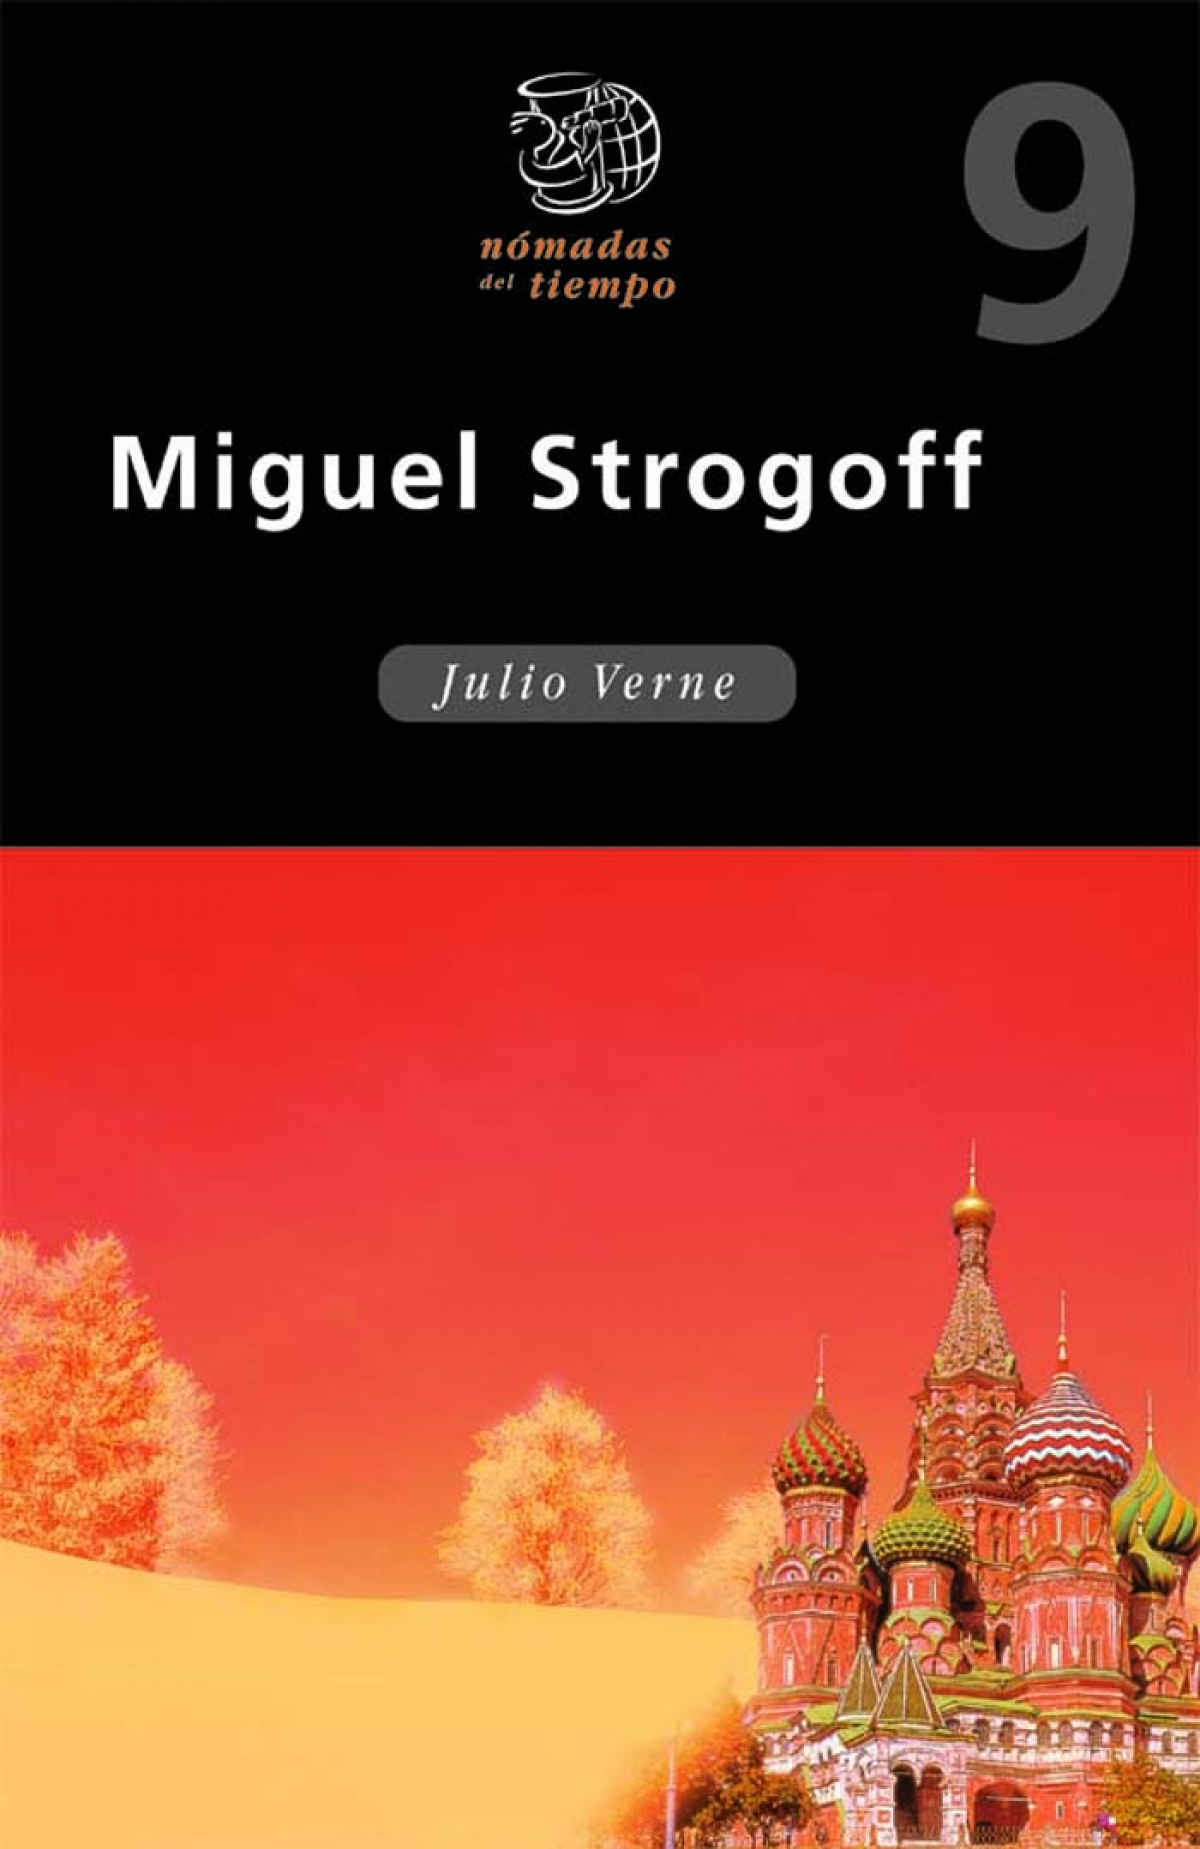 Miguel strogoff - Julio Verne